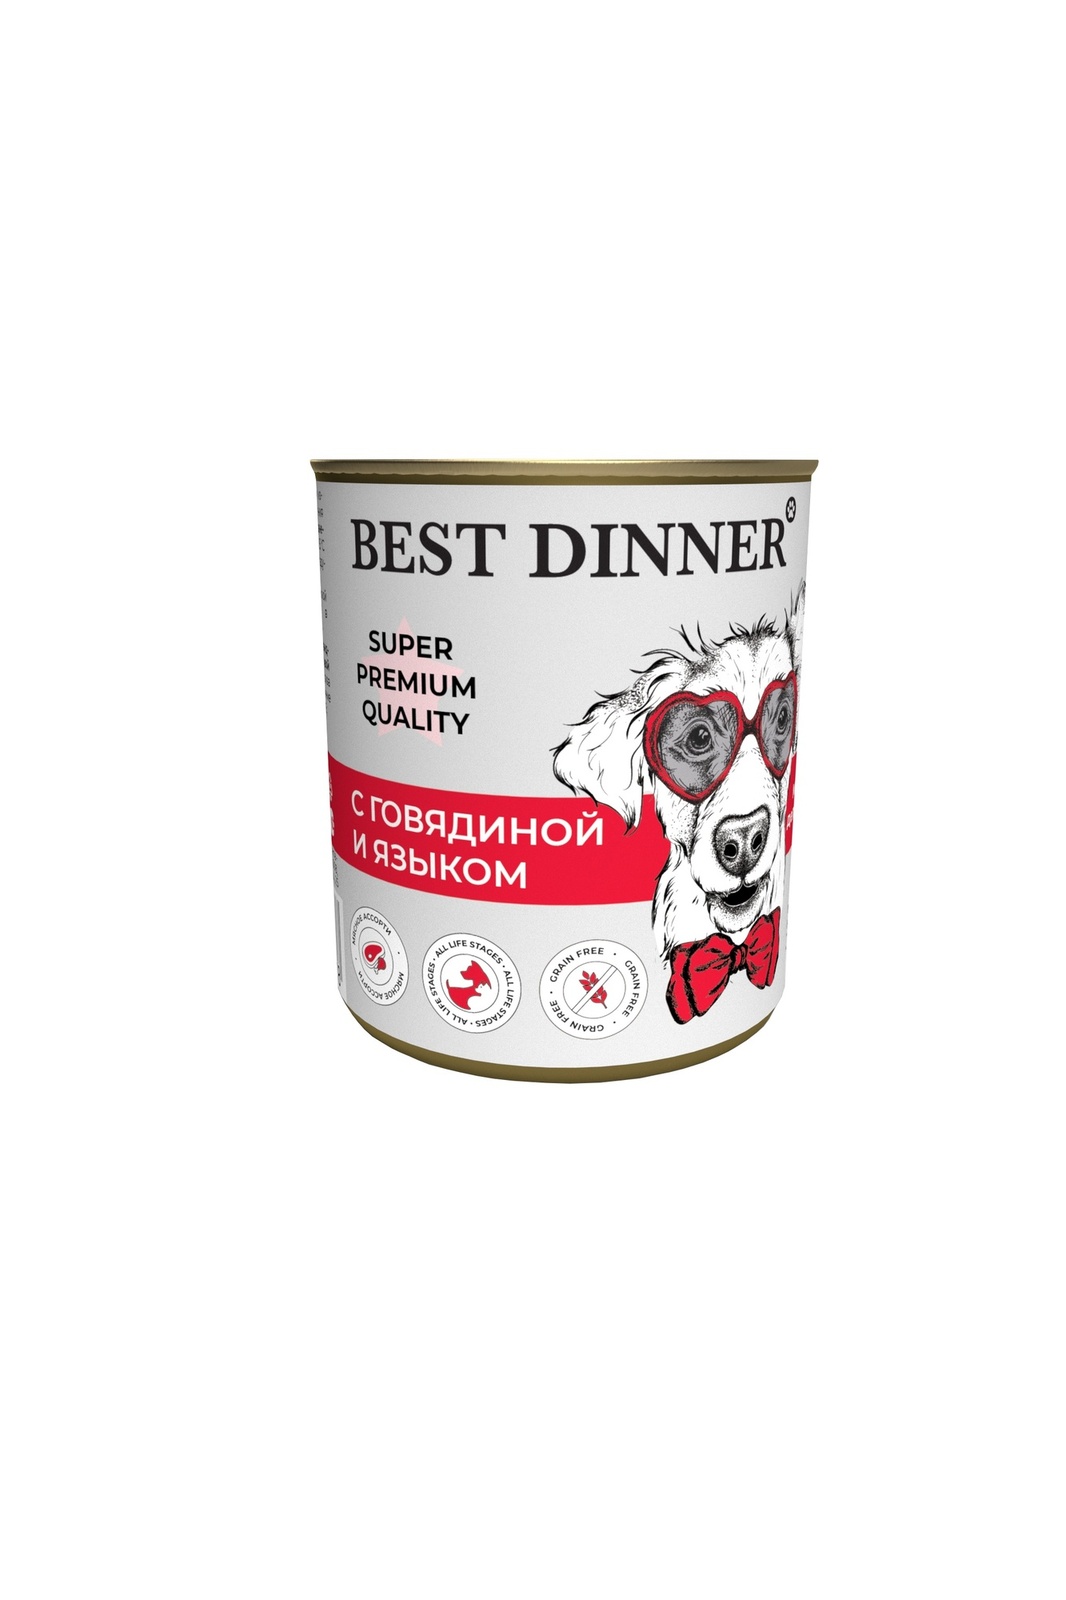 Best Dinner Best Dinner консервы для собак Super Premium С говядиной и языком (340 г) best dinner best dinner консервы для собак super premium с перепелкой 340 г